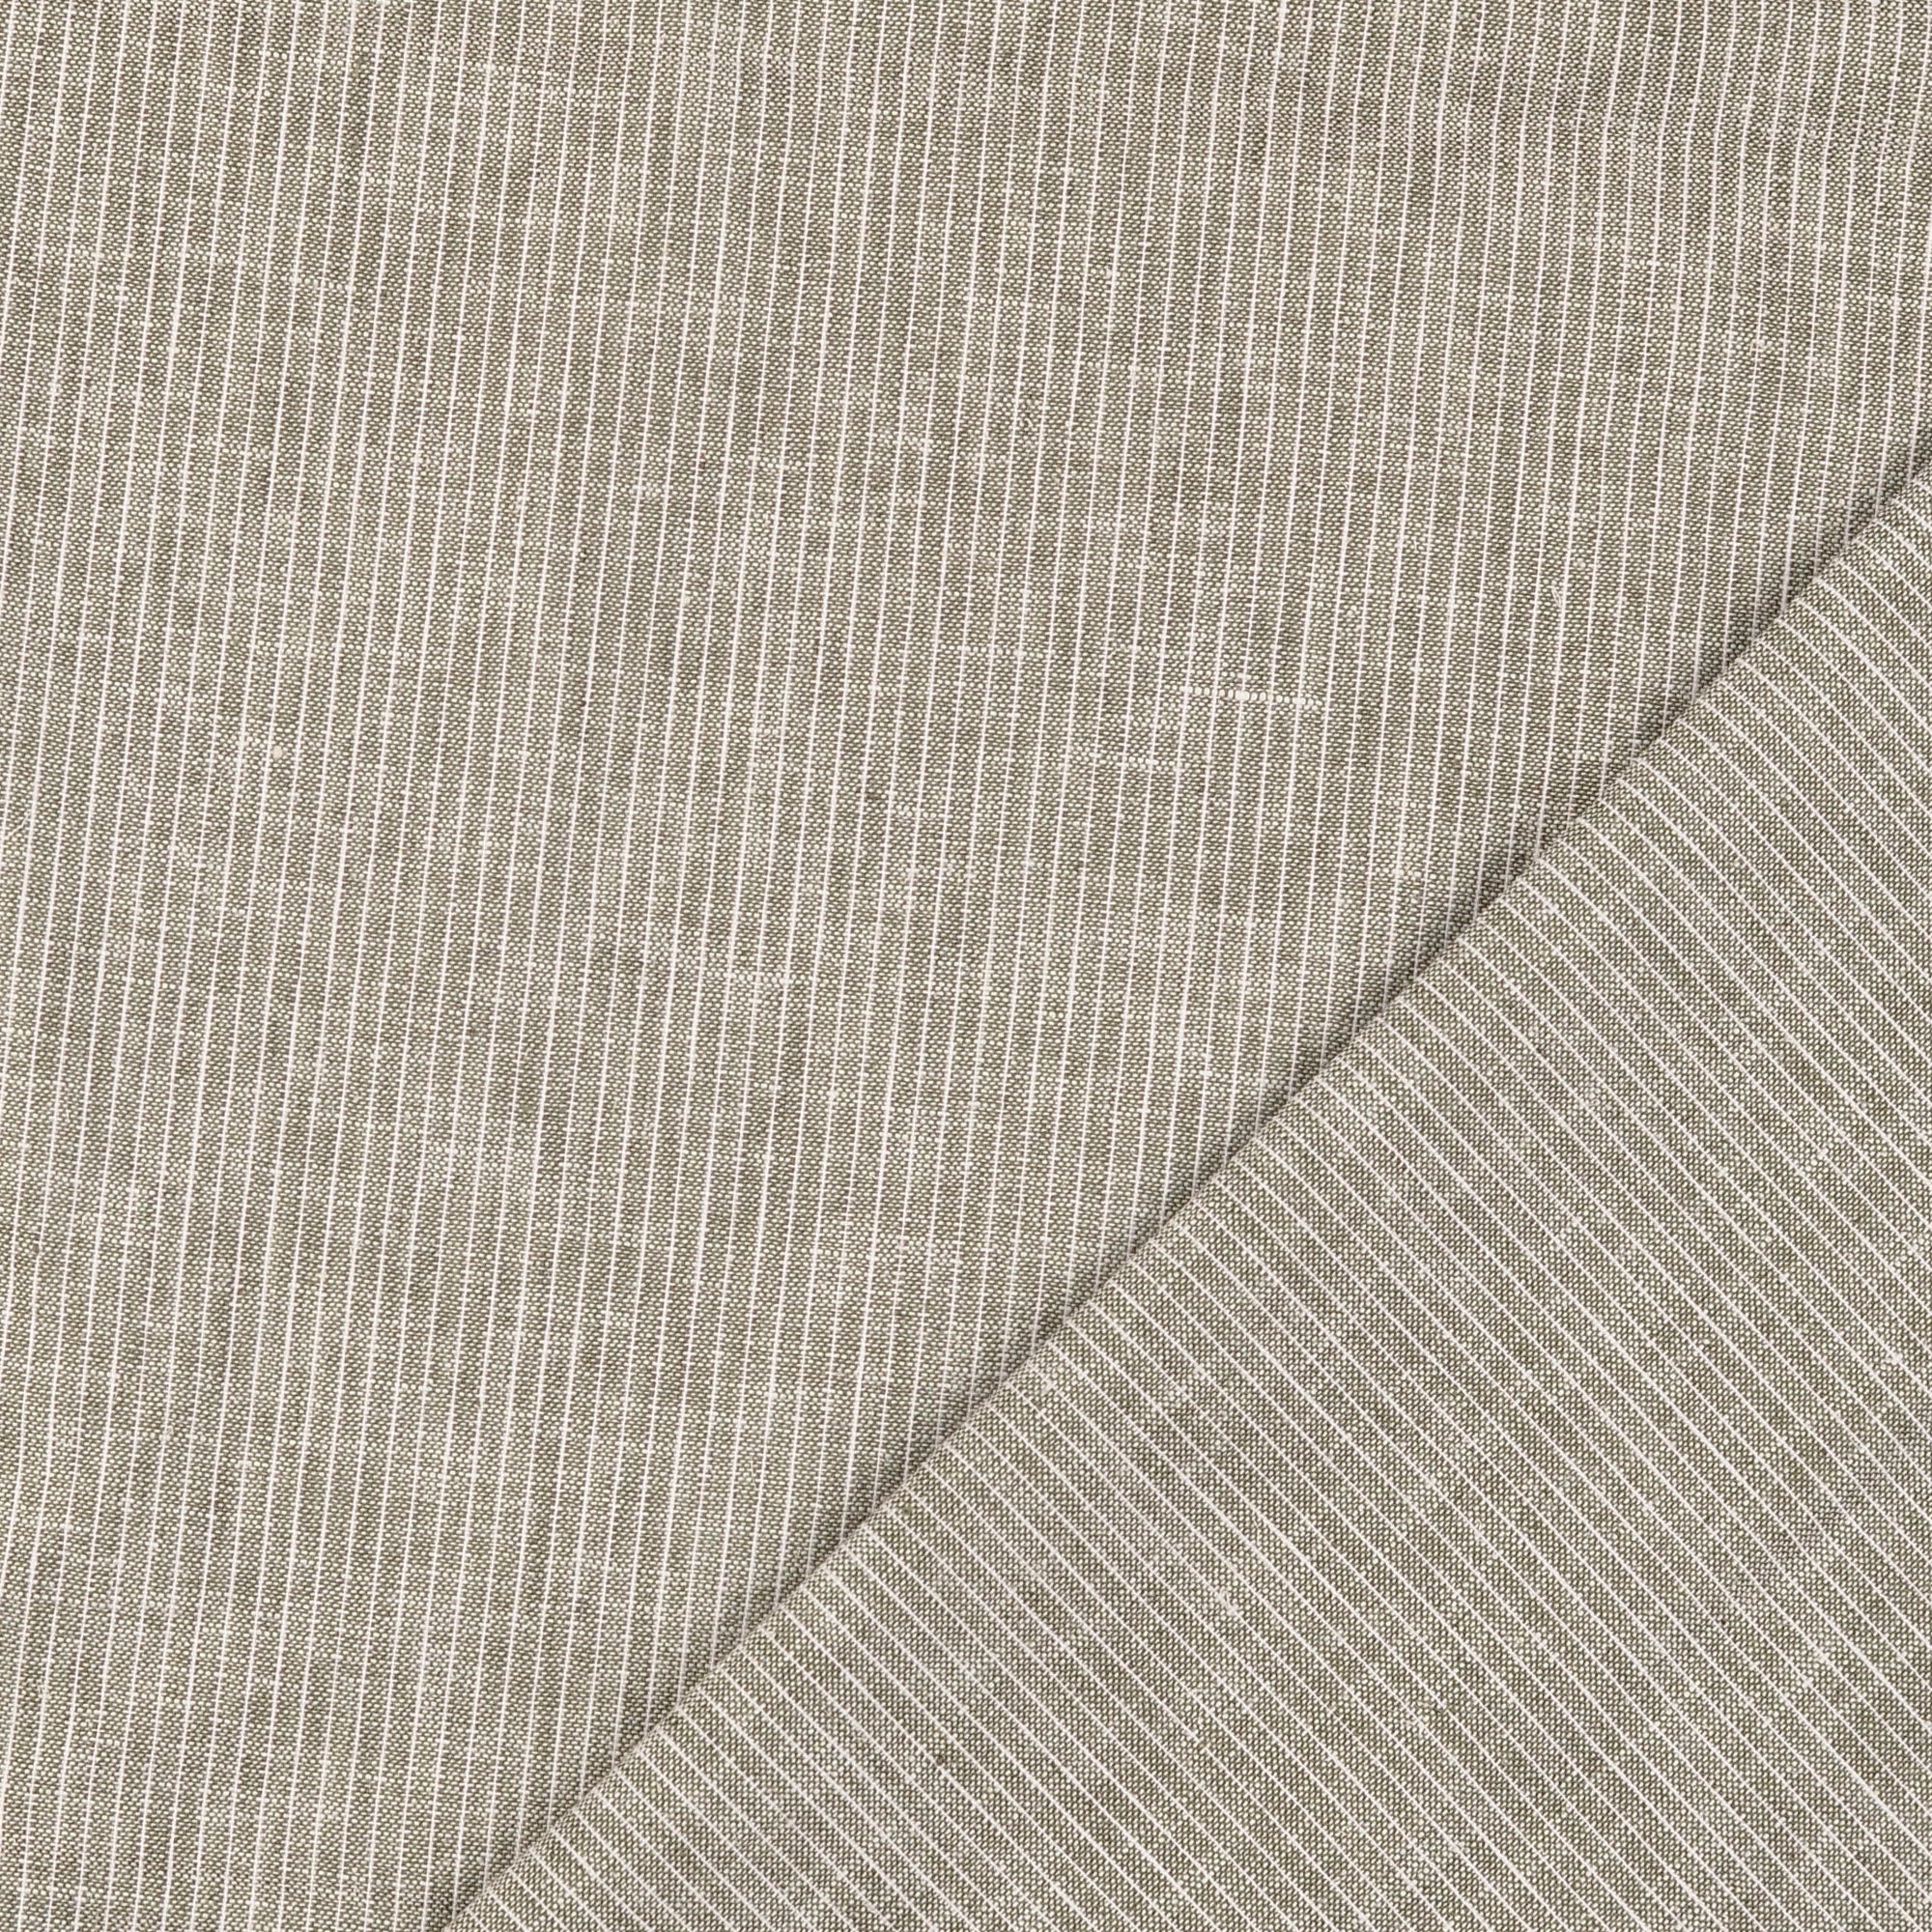 Fine Stripe Light Grey Linen Cotton Fabric